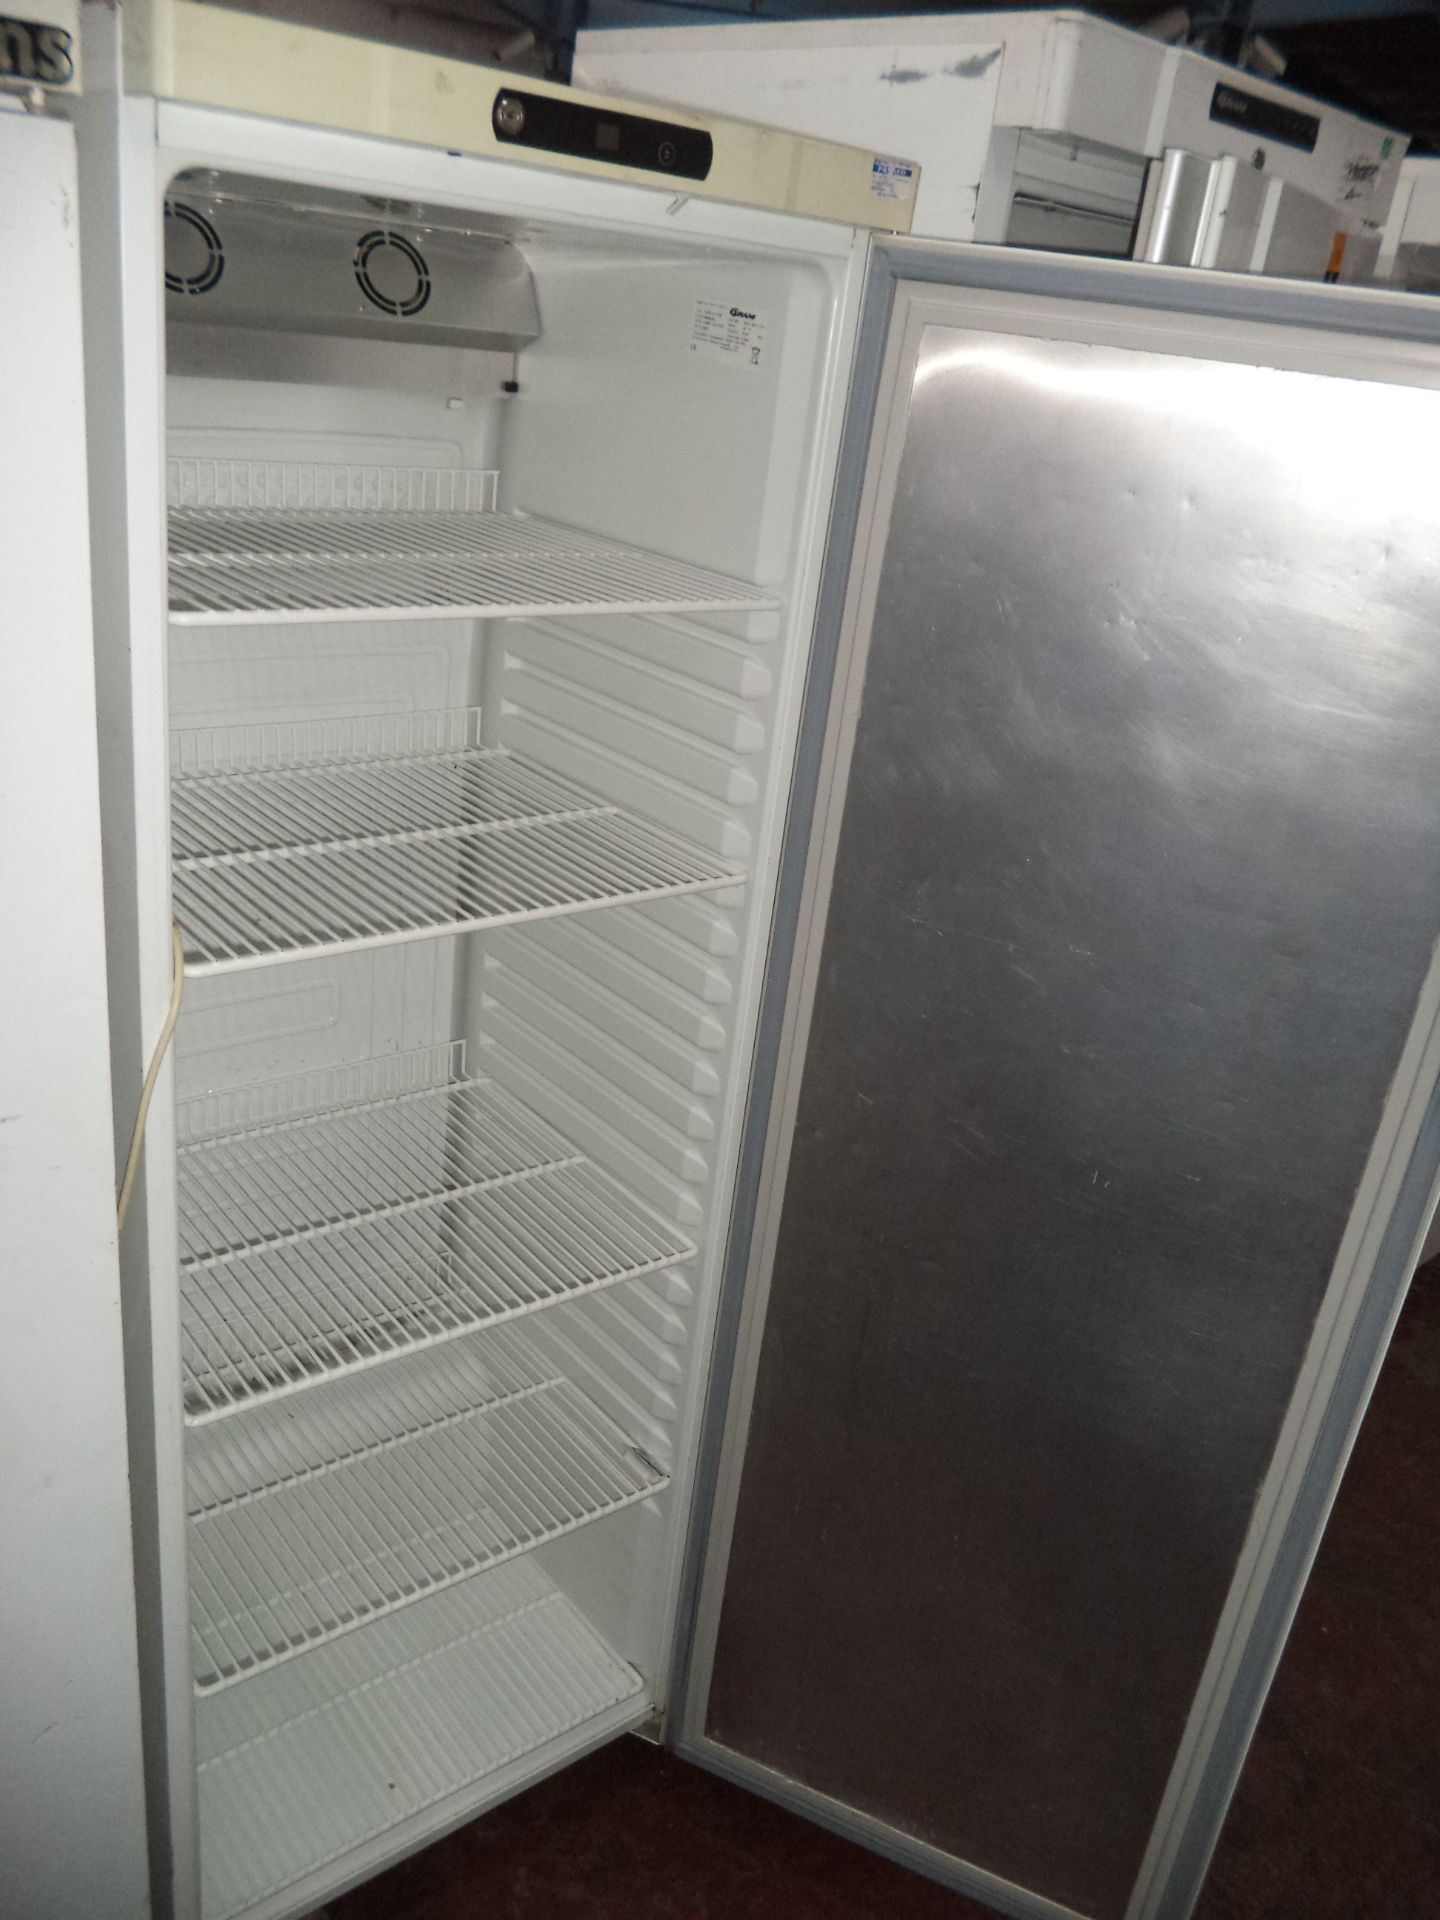 Gram K400 floor standing fridge IMPORTANT: Please remember goods successfully bid upon must be - Image 2 of 3